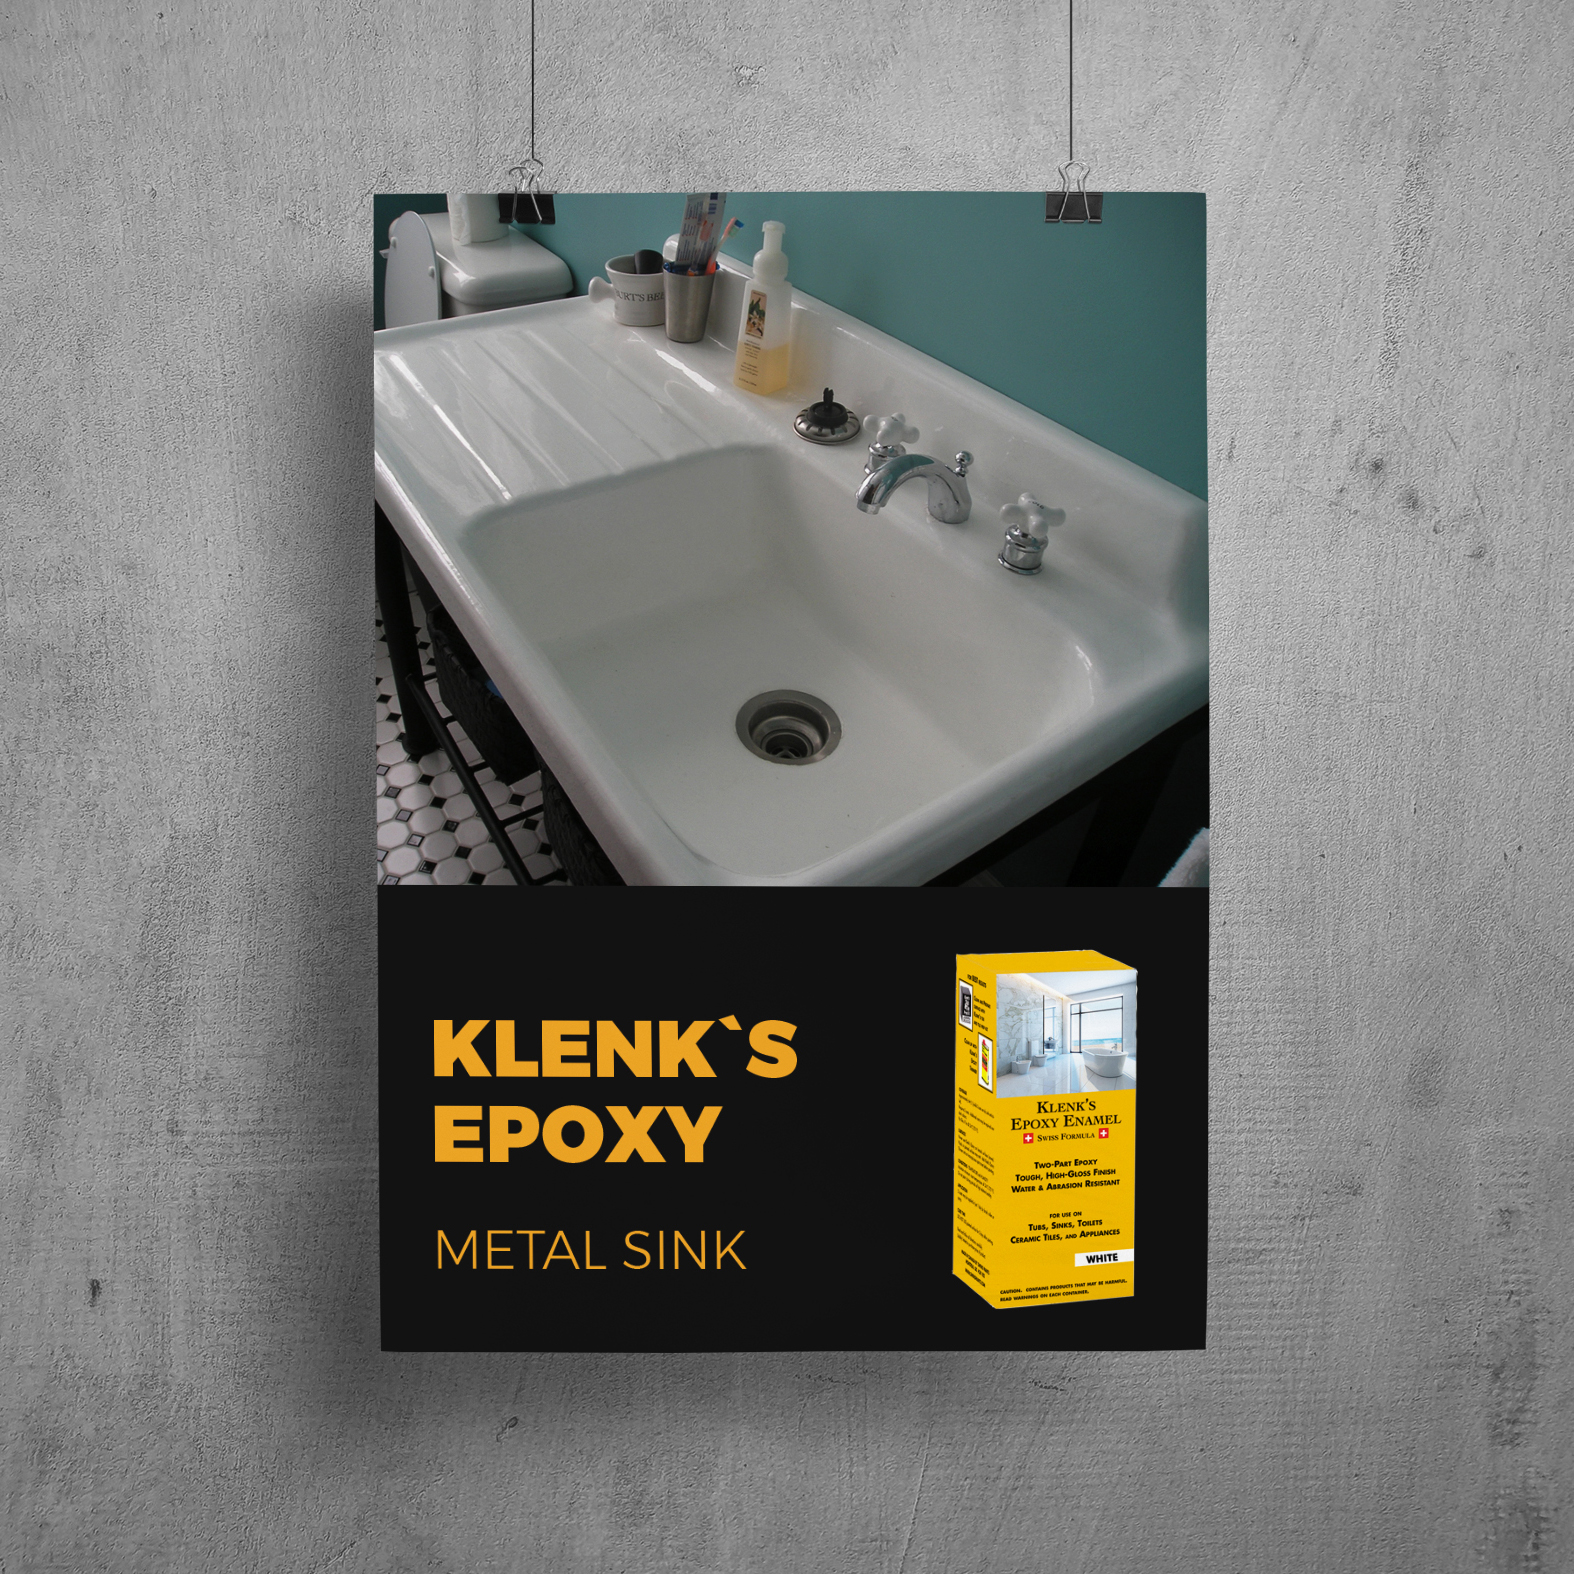 Klenk's Epoxy <br>Metal Sink